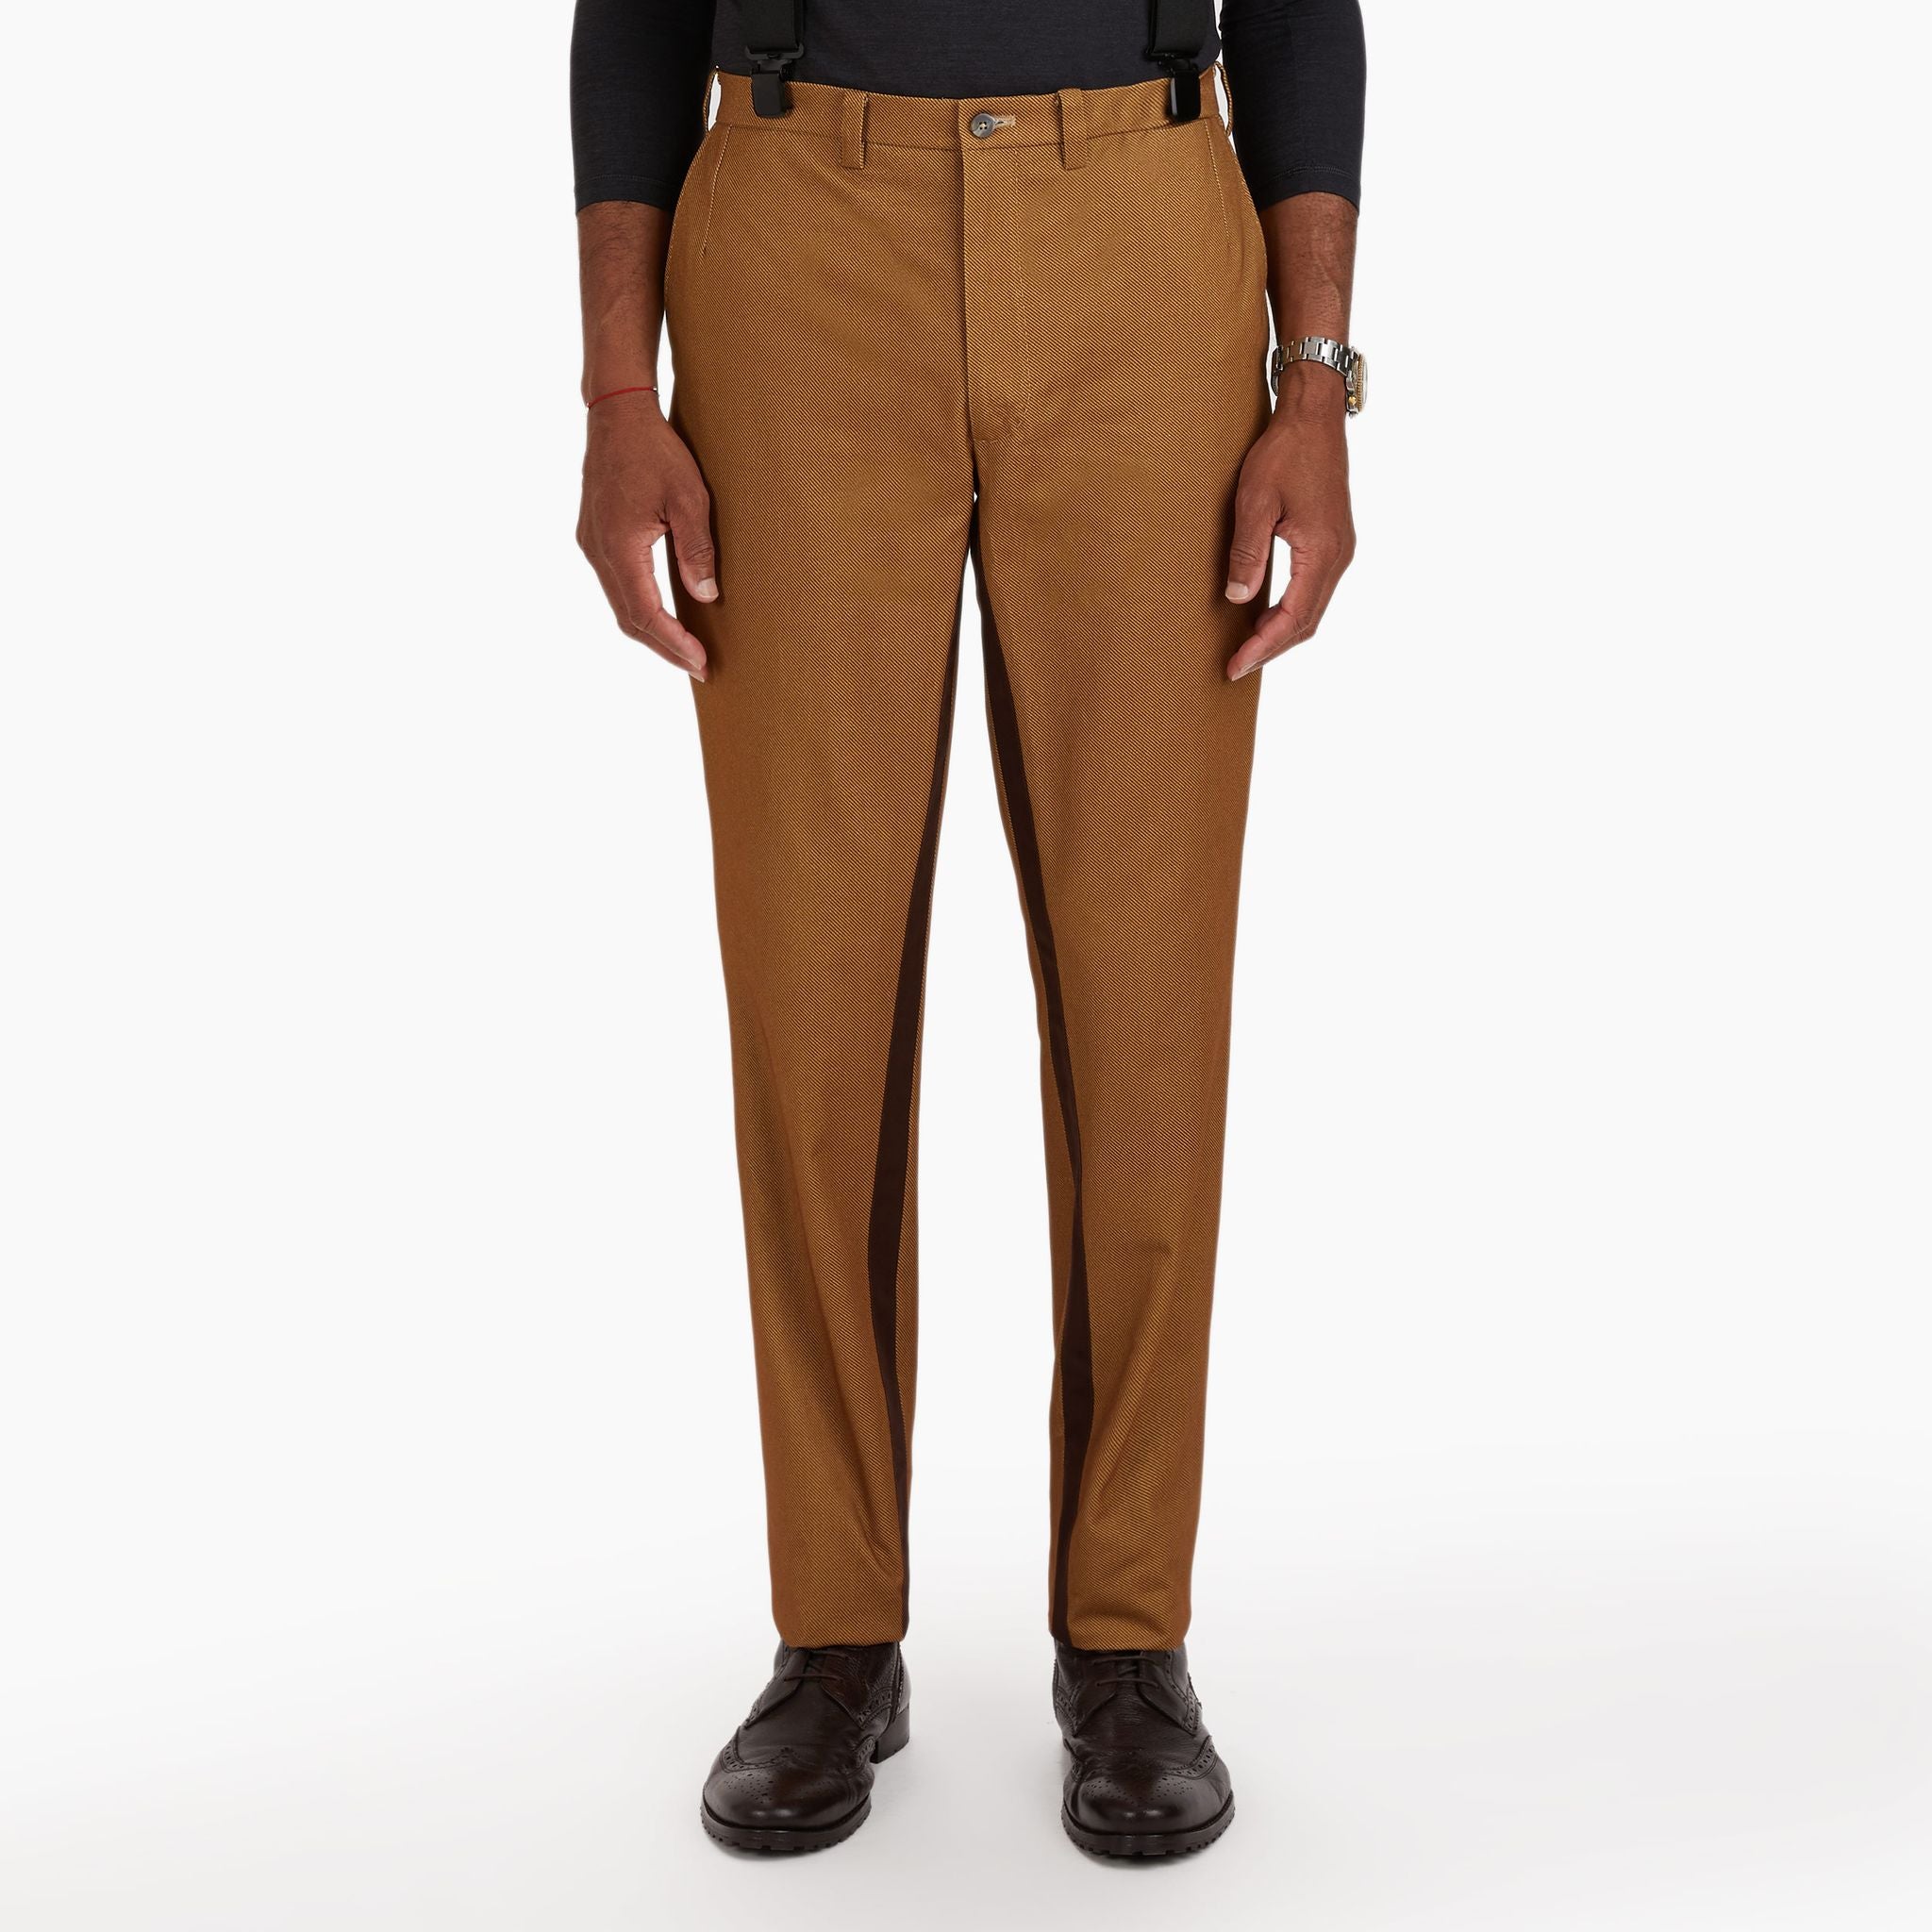 PJ PAUL JONES Mens Double Pleated Pants Tweed Herringbone Business Casual  Pants for Wedding Brown at Amazon Men's Clothing store